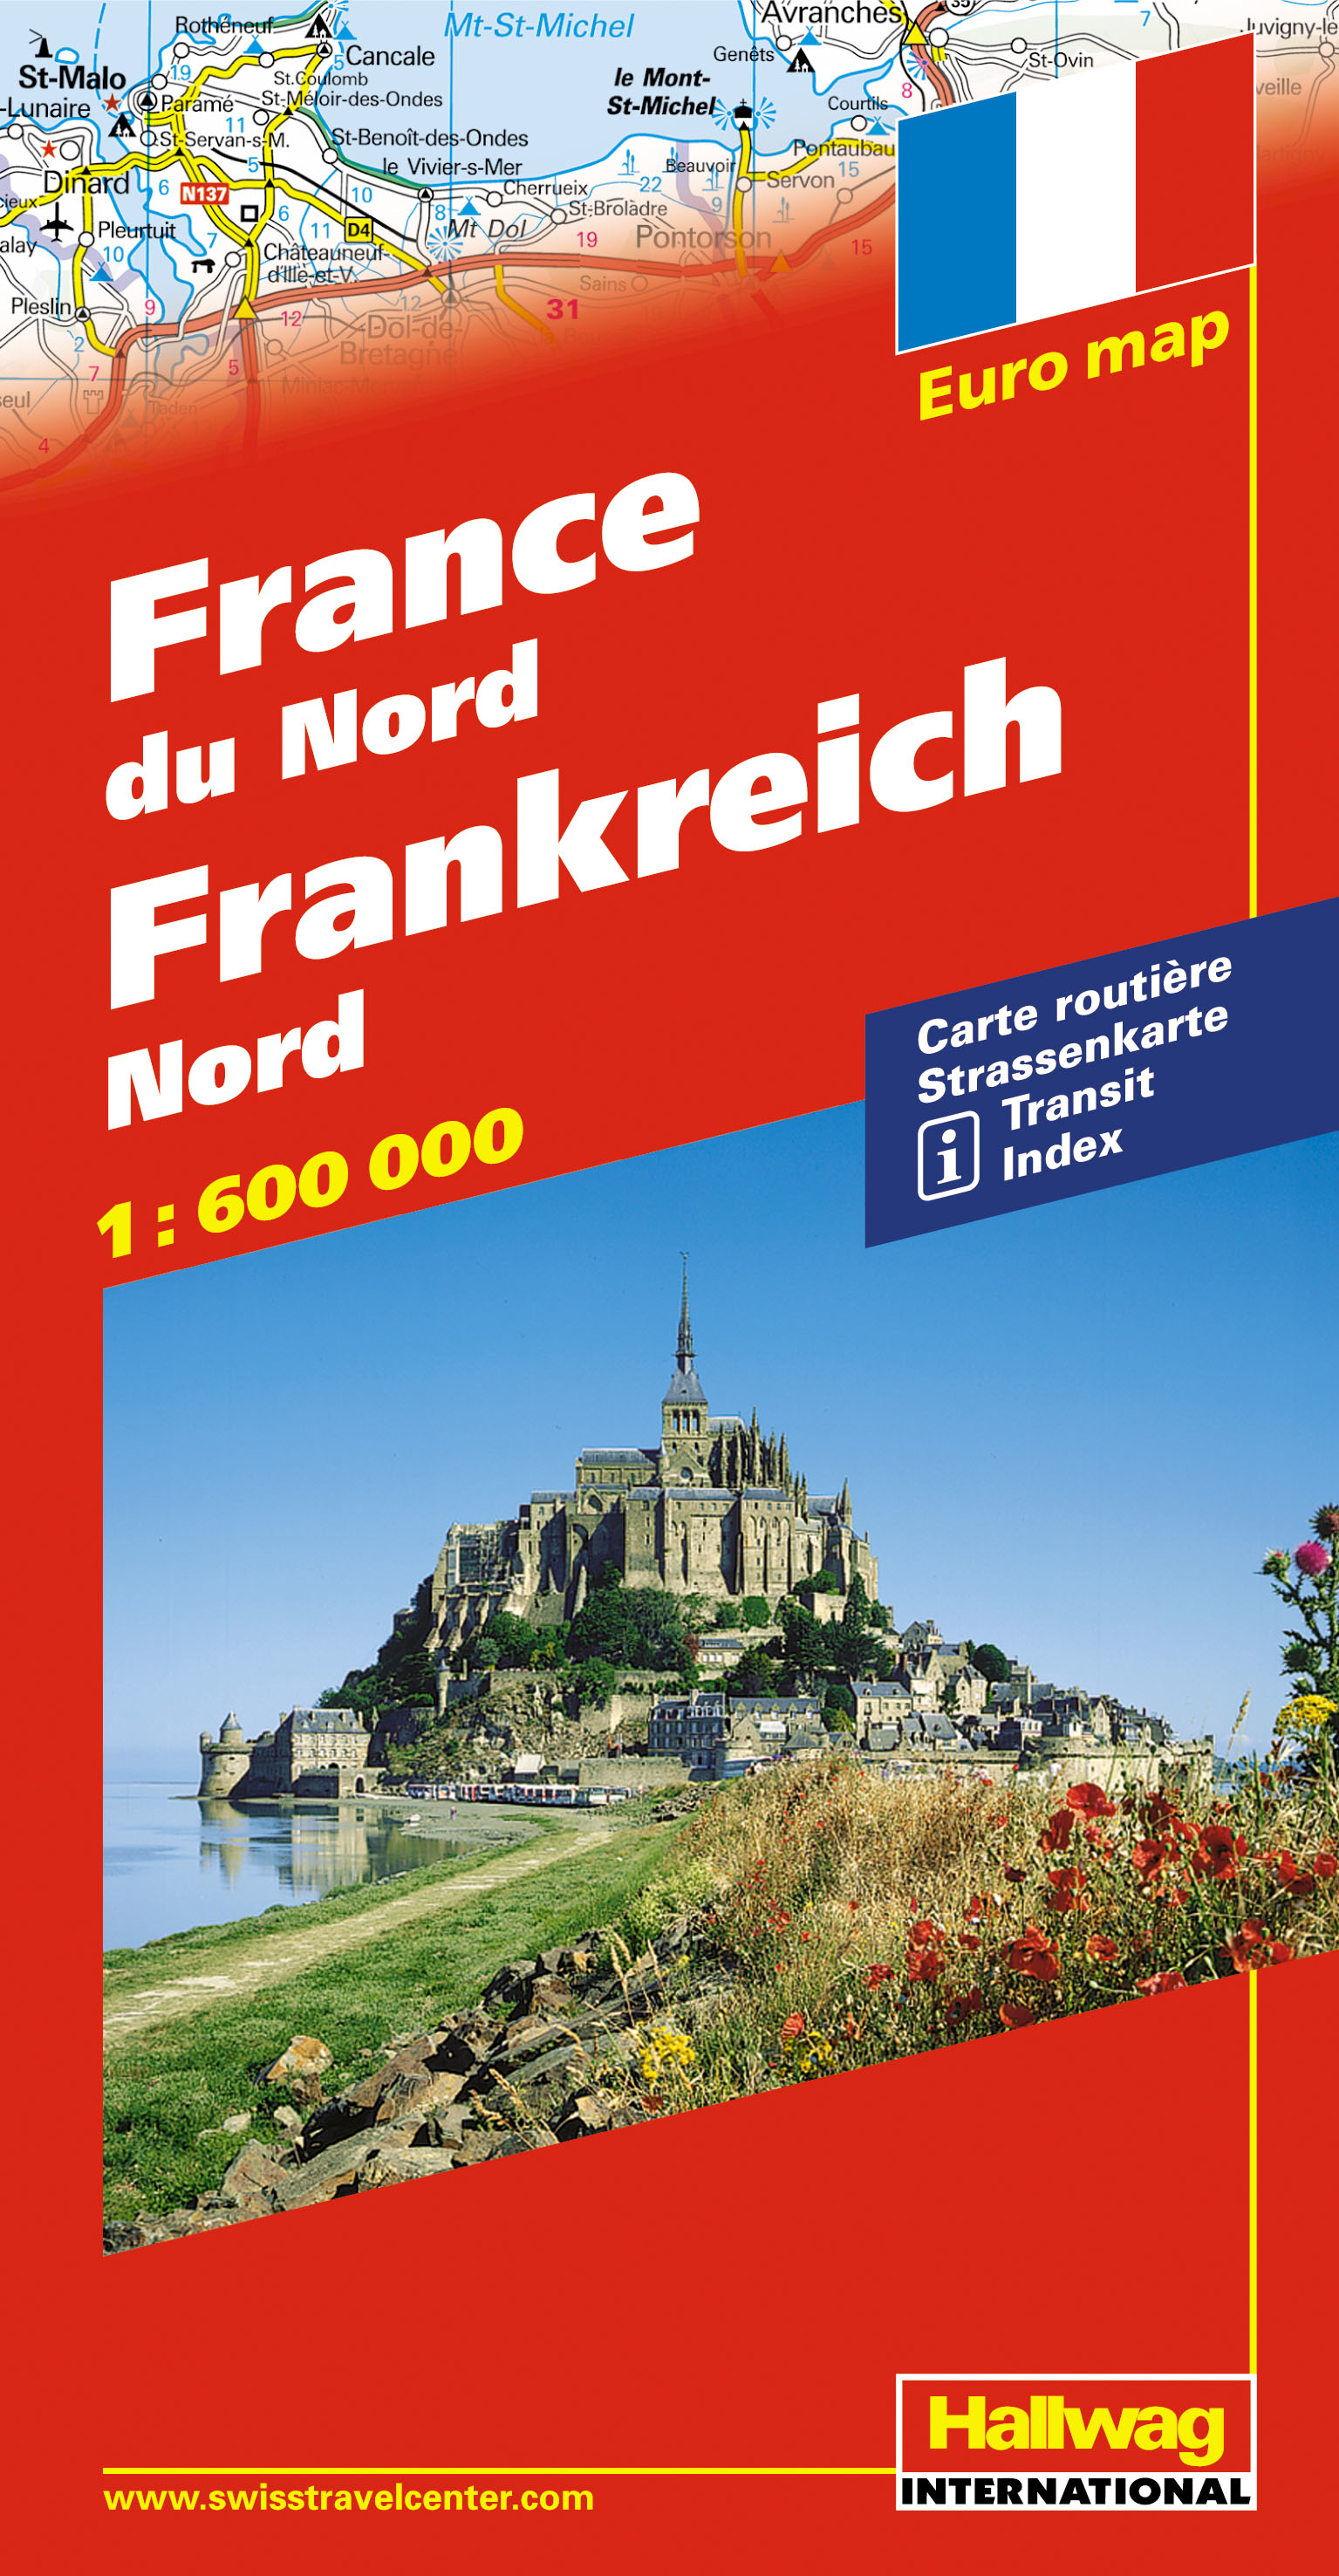 HALLWAG Strassenkarte 382830970 Frankreich Nord 1:600'000